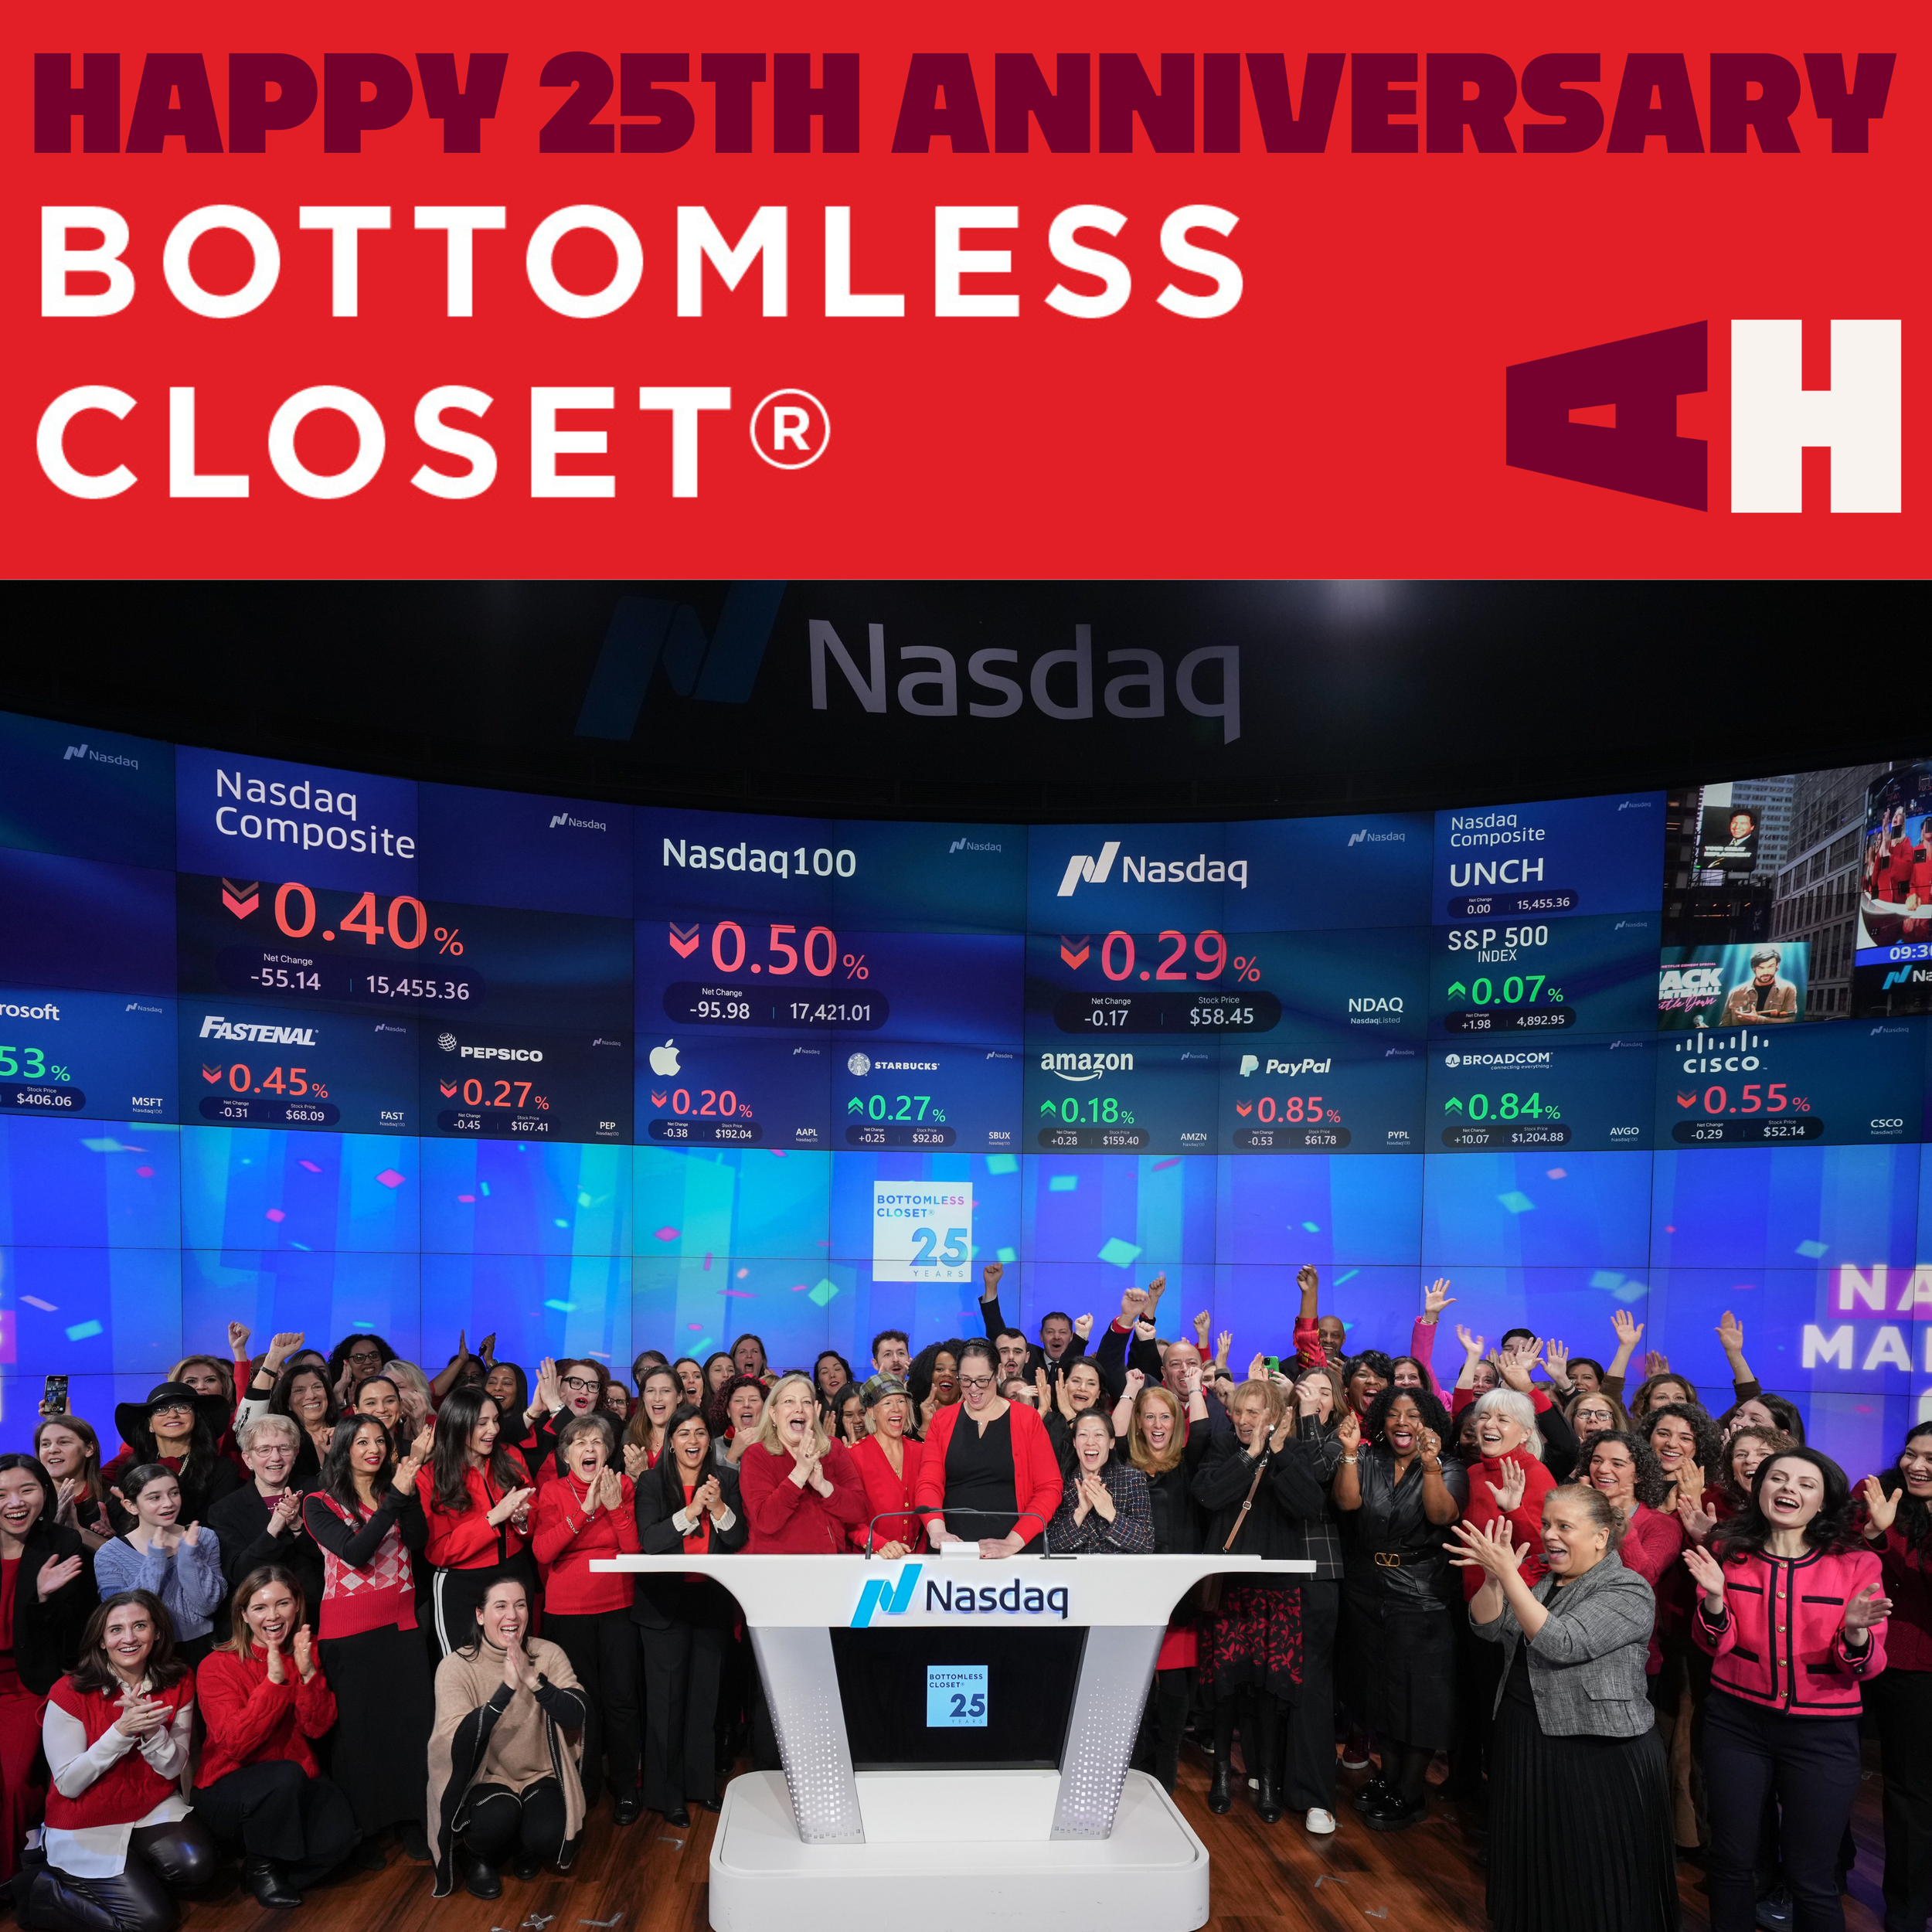 Bottomless Closet - 25th Anniversary at NASDAQ